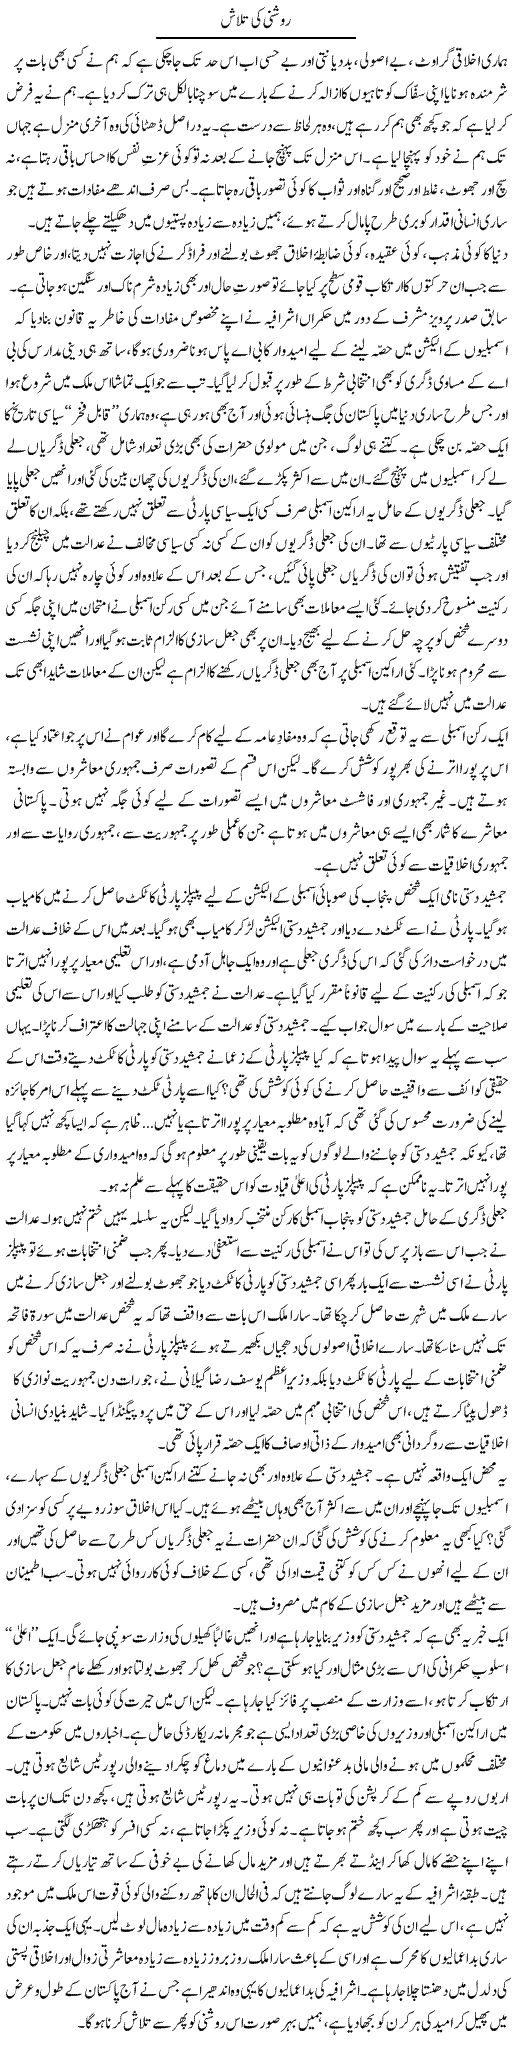 Roshani ki Talash Express Column Anwar Hasan 4 June 2010